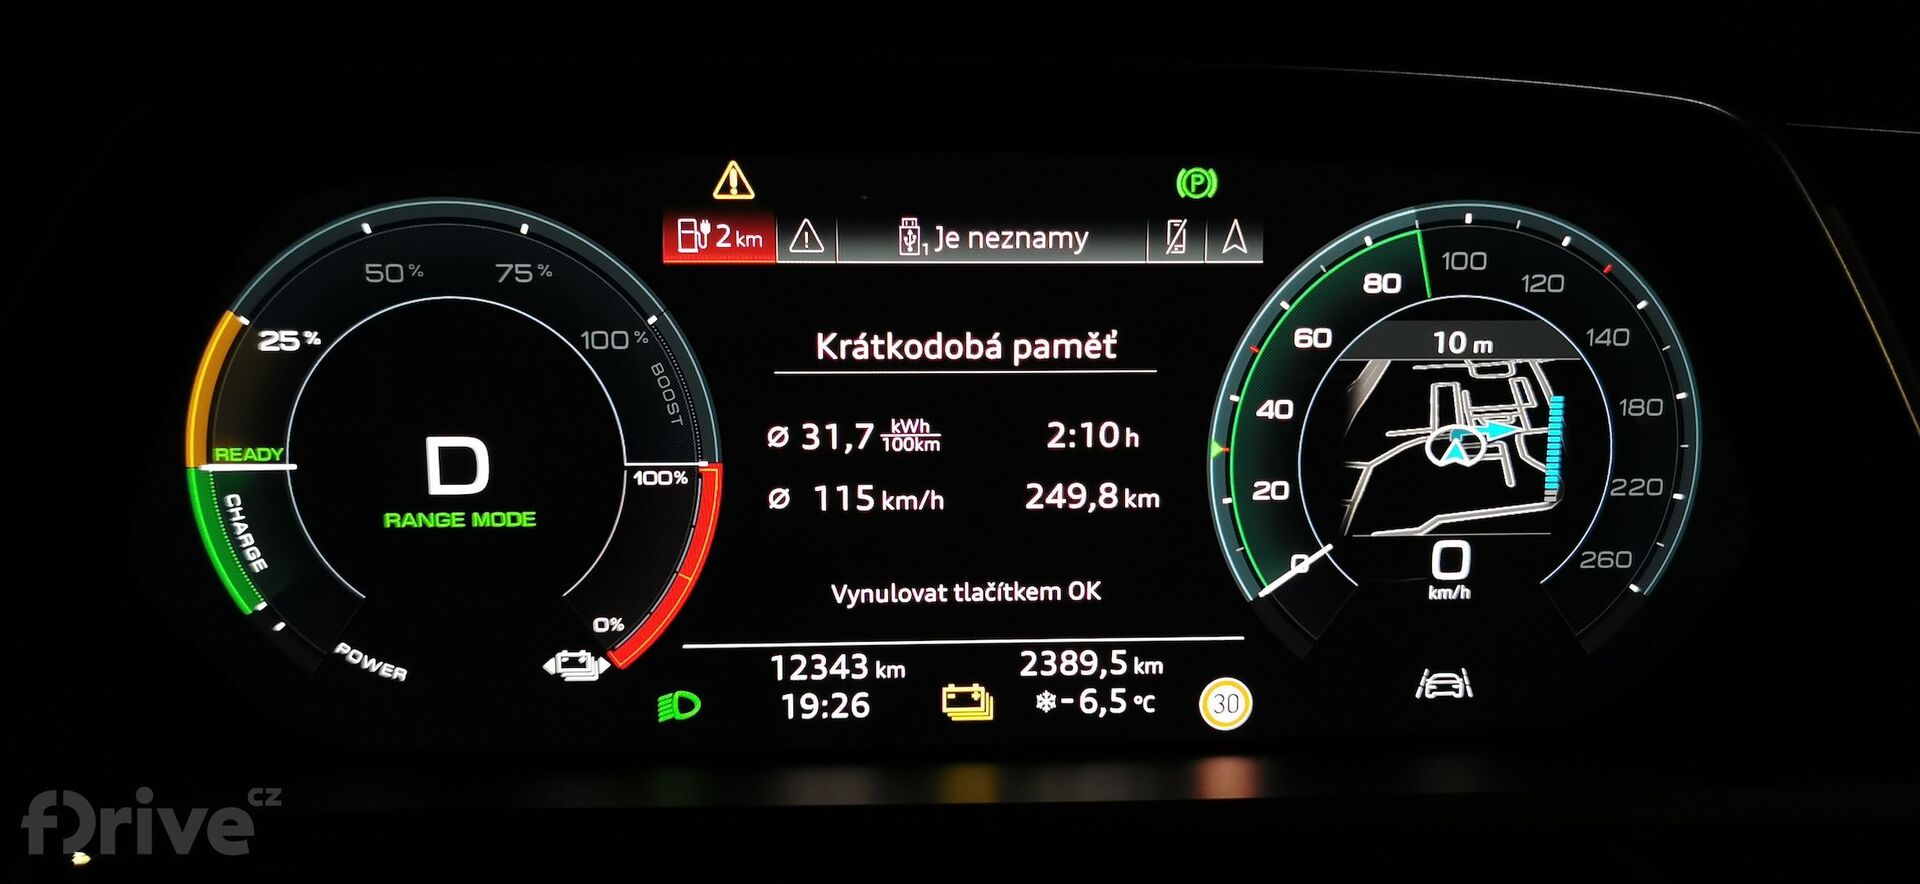 Audi e-tron Sportback (2020)